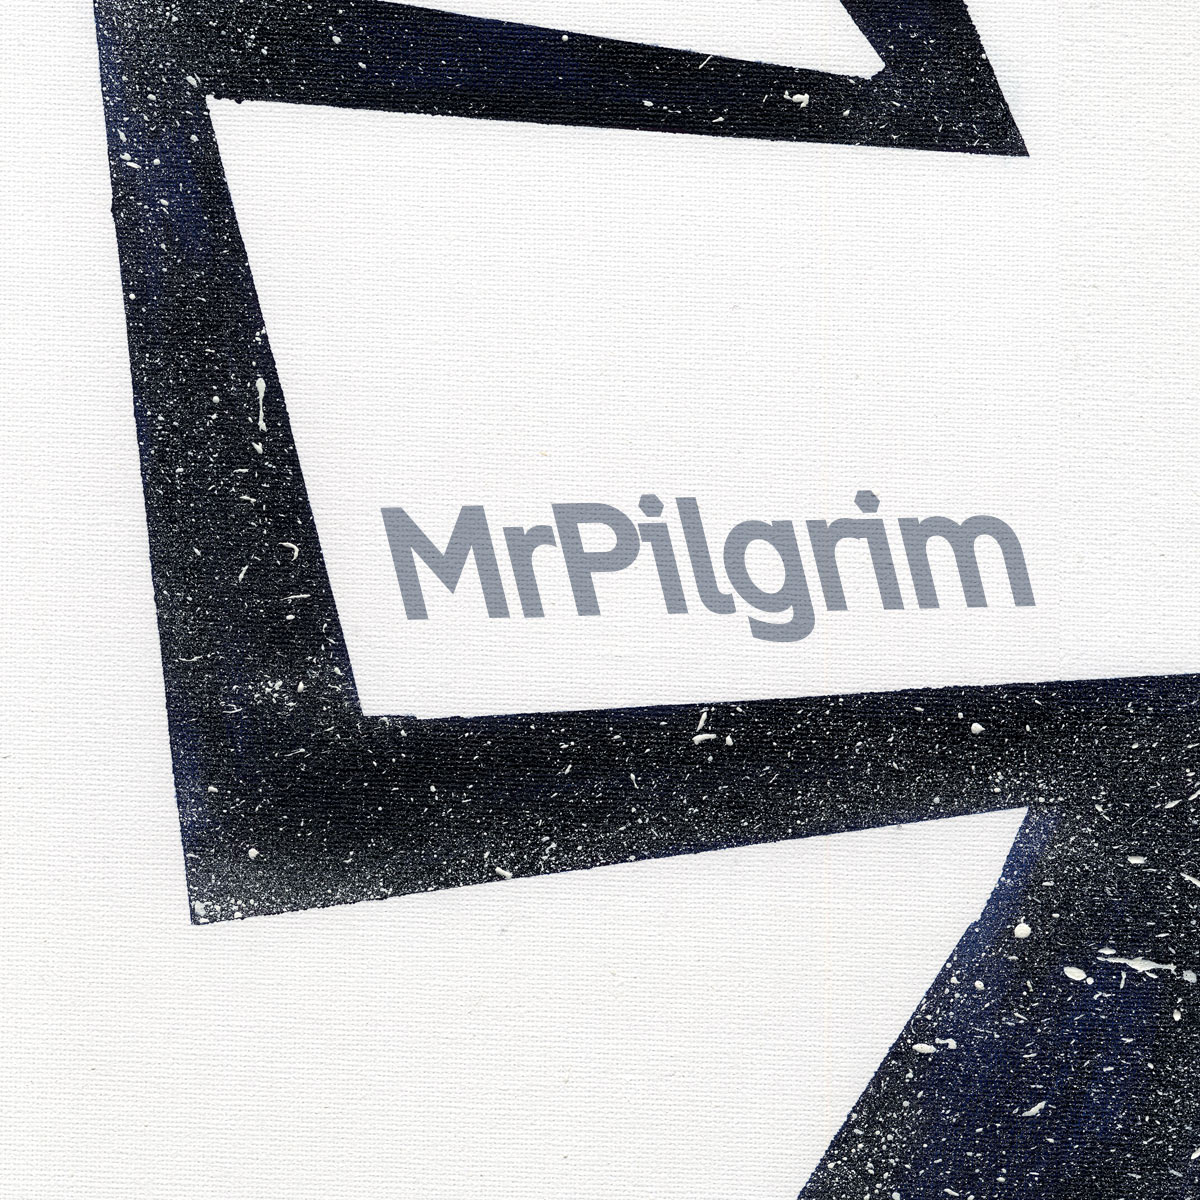 “Birth” by Mr Pilgrim